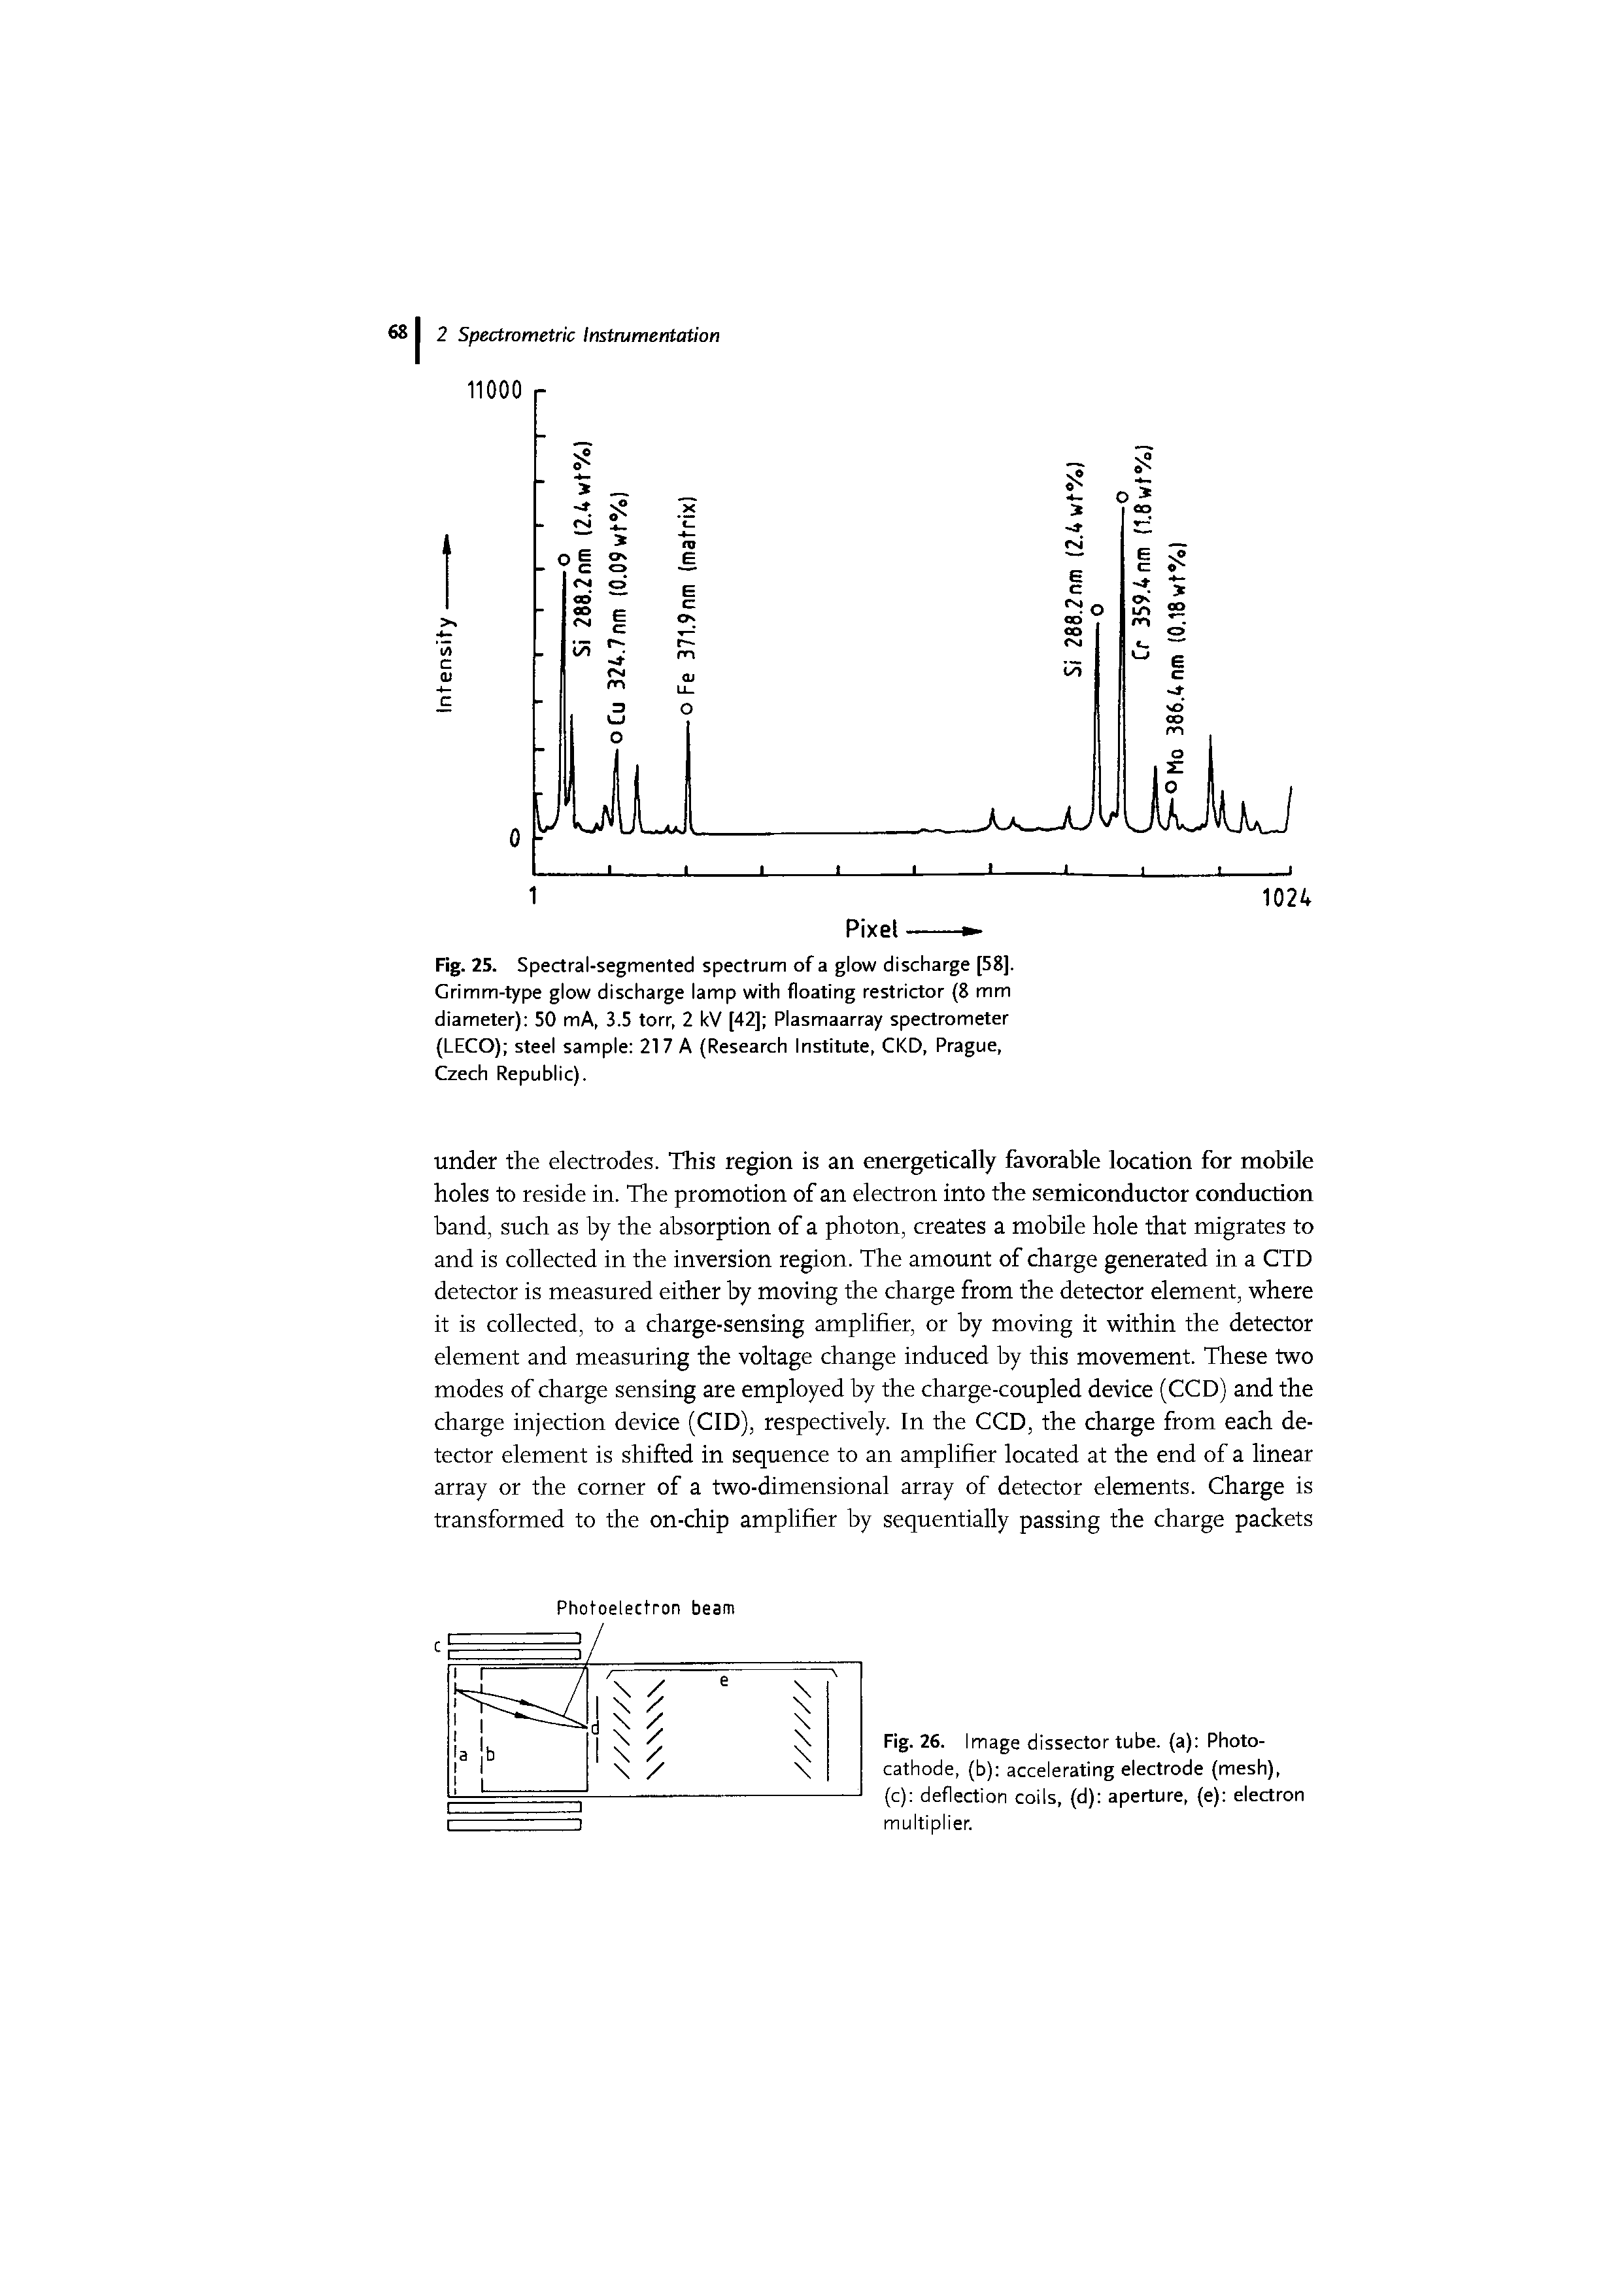 Fig. 26. Image dissector tube, (a) Photocathode, (b) accelerating electrode (mesh), (c) deflection coils, (d) aperture, (e) electron multiplier.